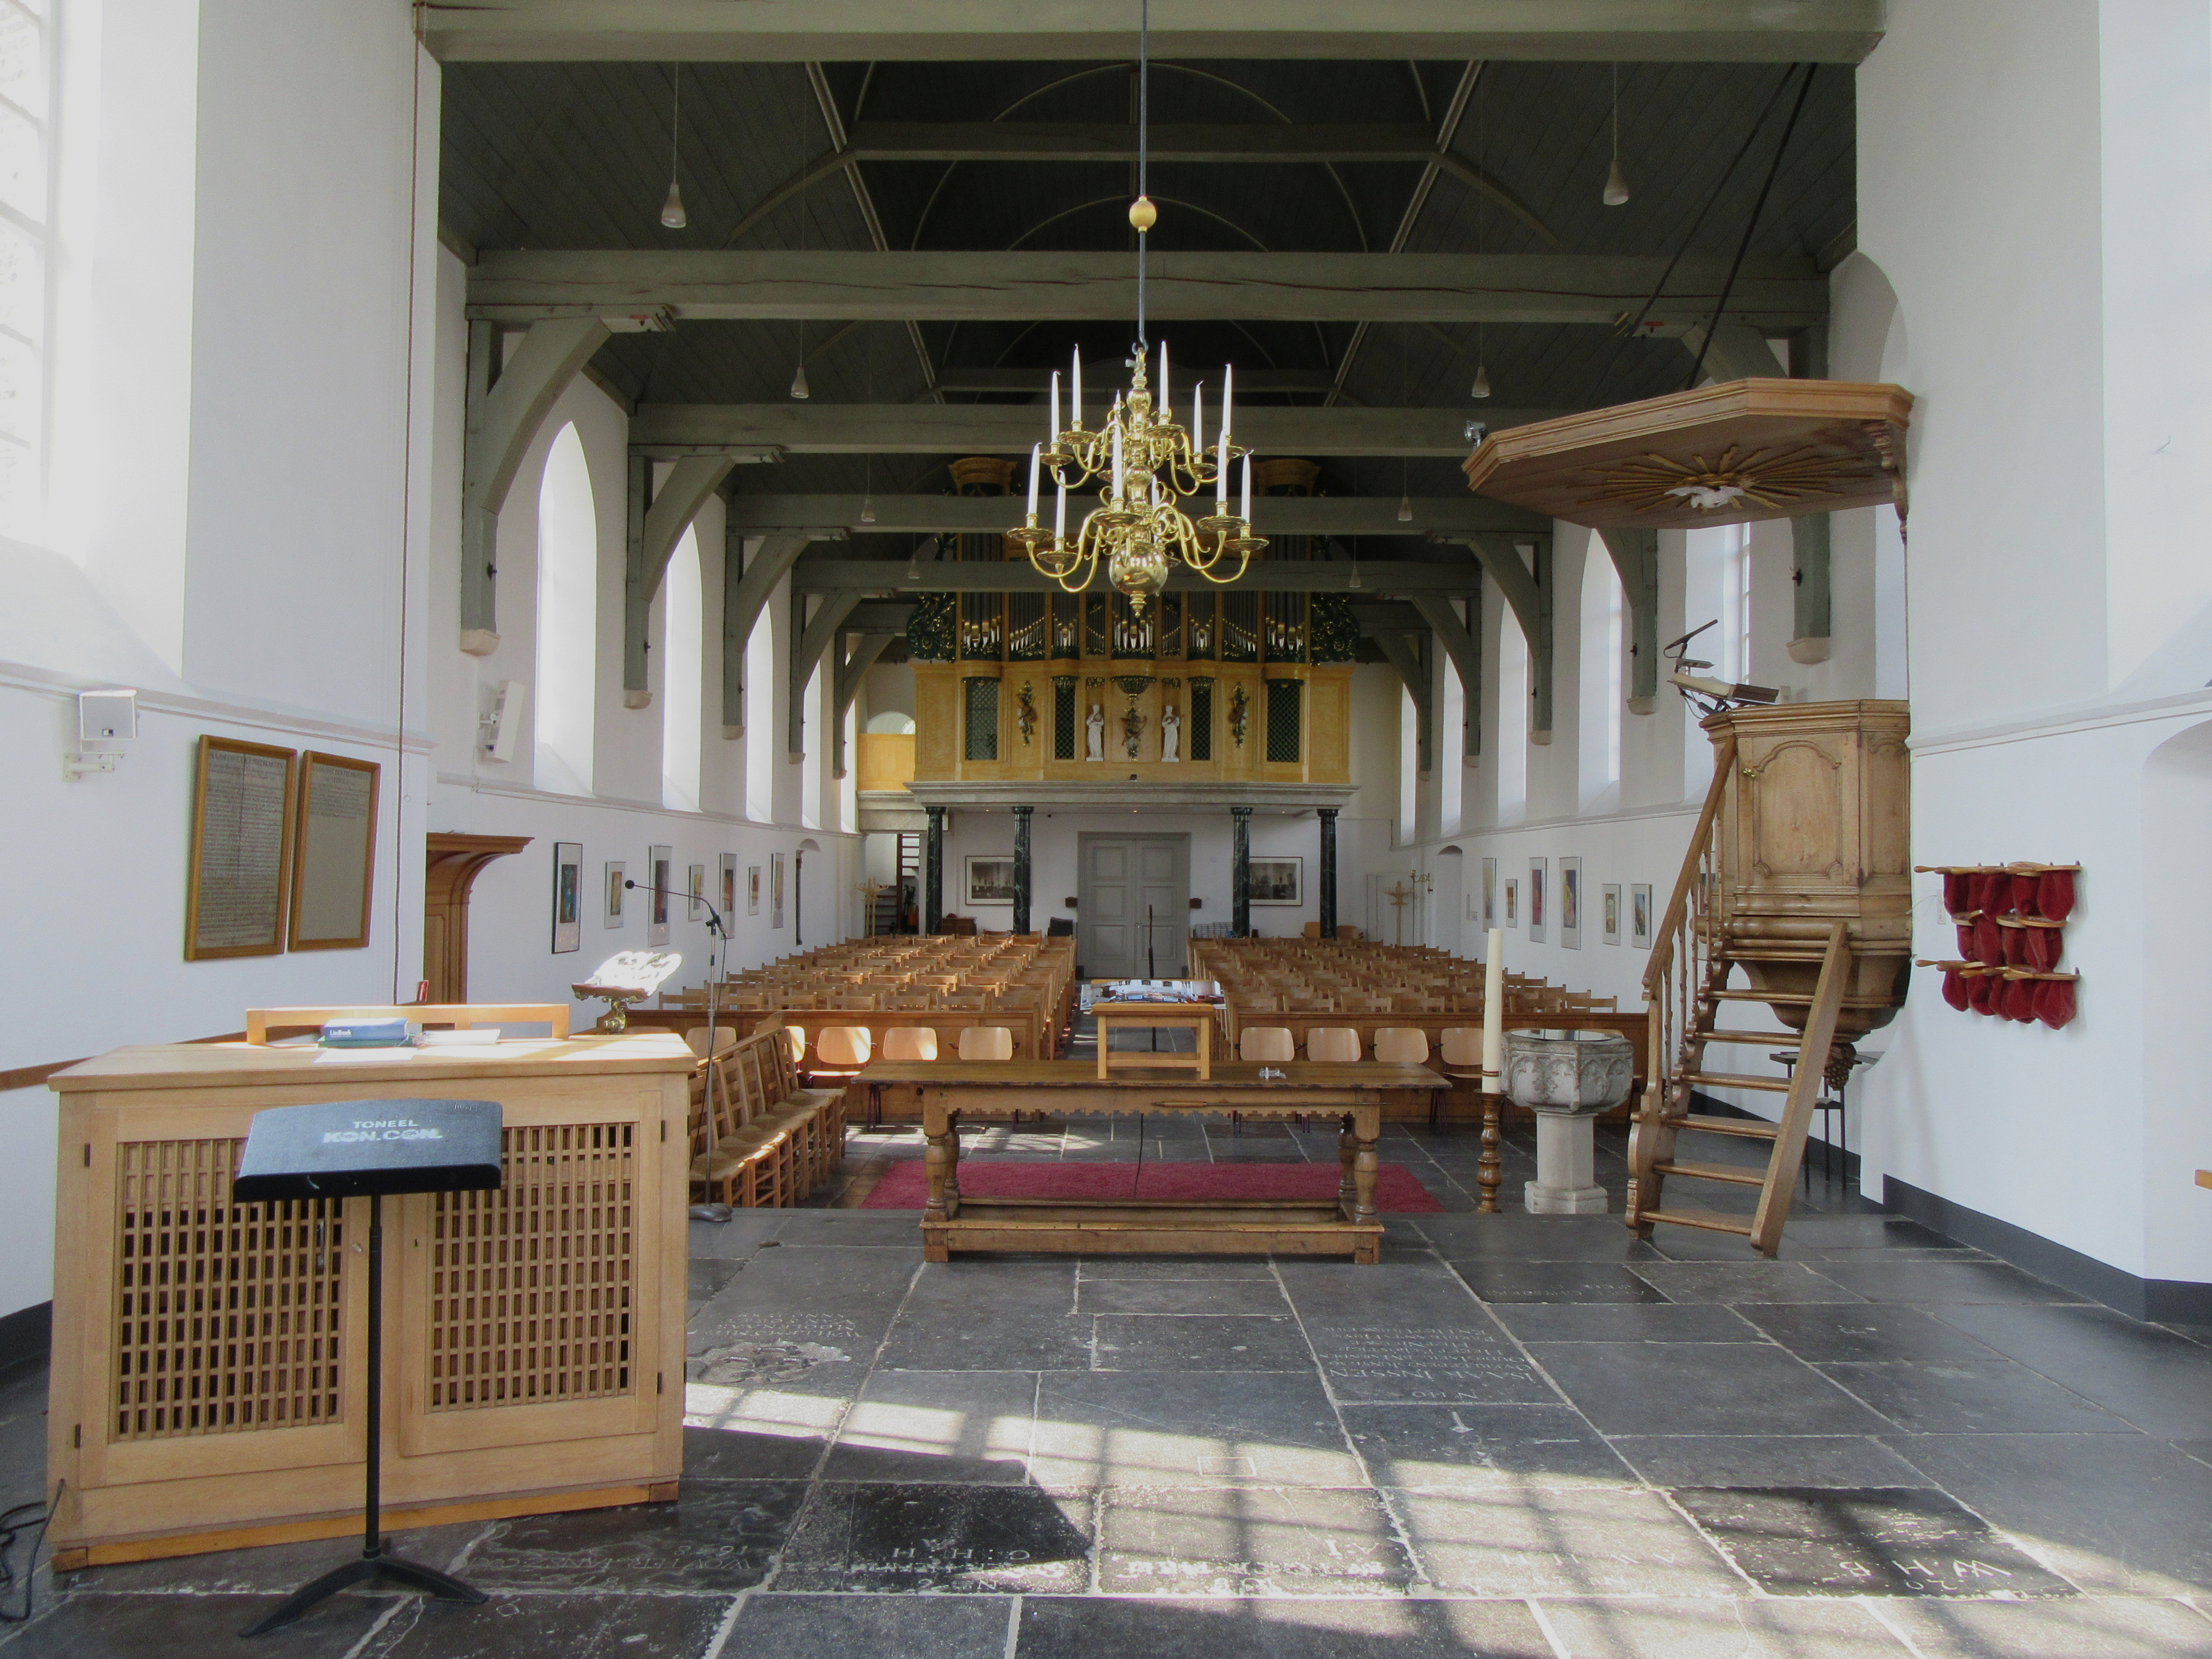 Open Monumentendag 2021 in de Oude Kerk